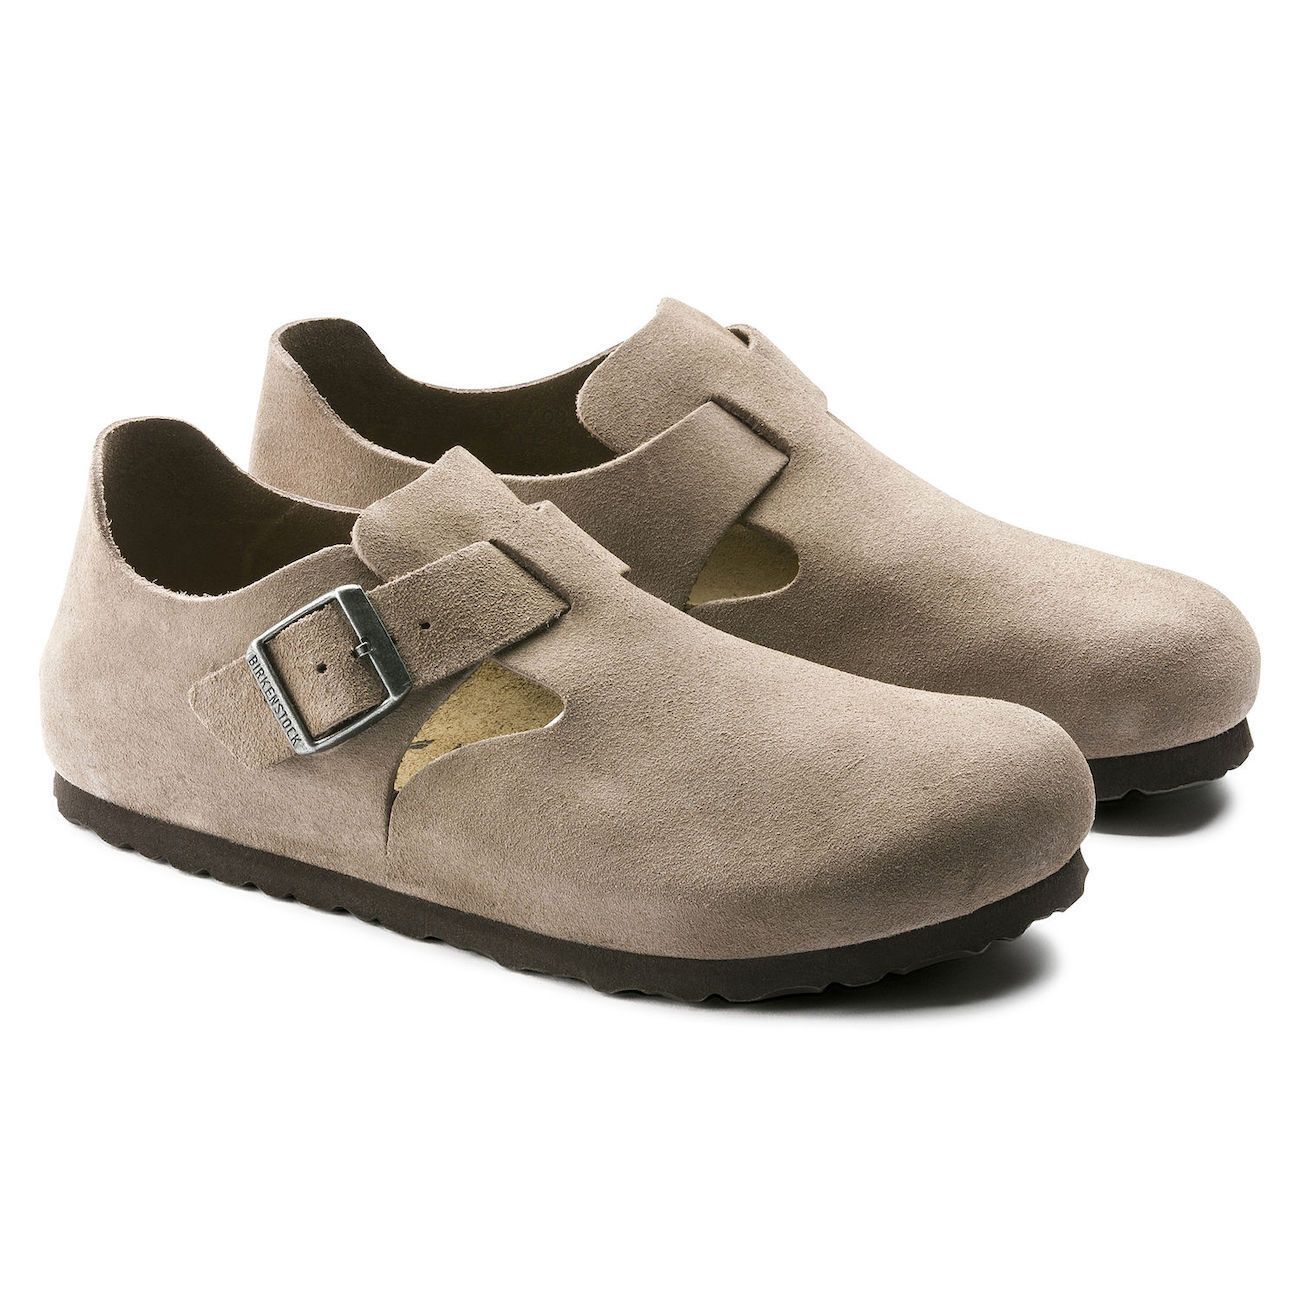 Birkenstock Shoes, London, Suede Leather, Narrow Fit, Taupe Shoes Birkenstock Shoes Taupe 37 